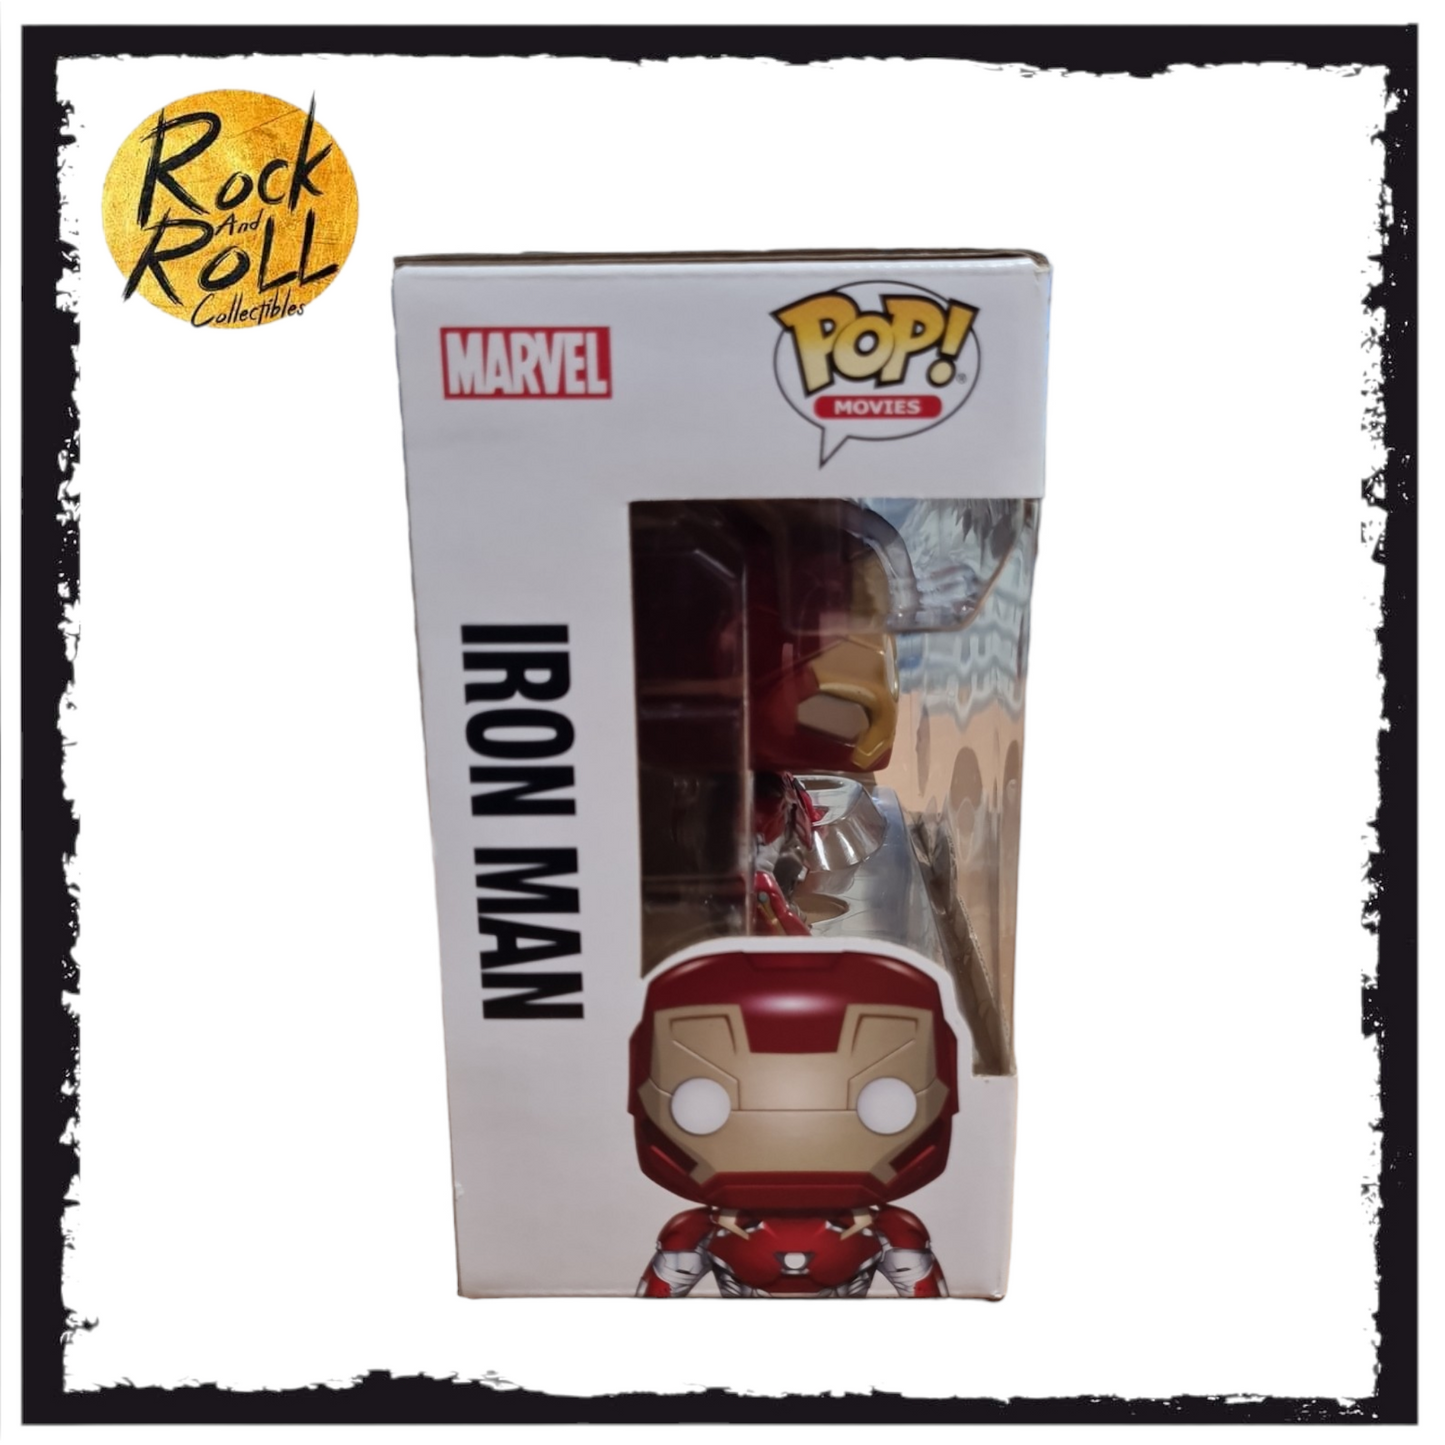 Spider-man Homecoming - Iron Man / Spider-Man Funko Pop! 2 Pack - Exclusive